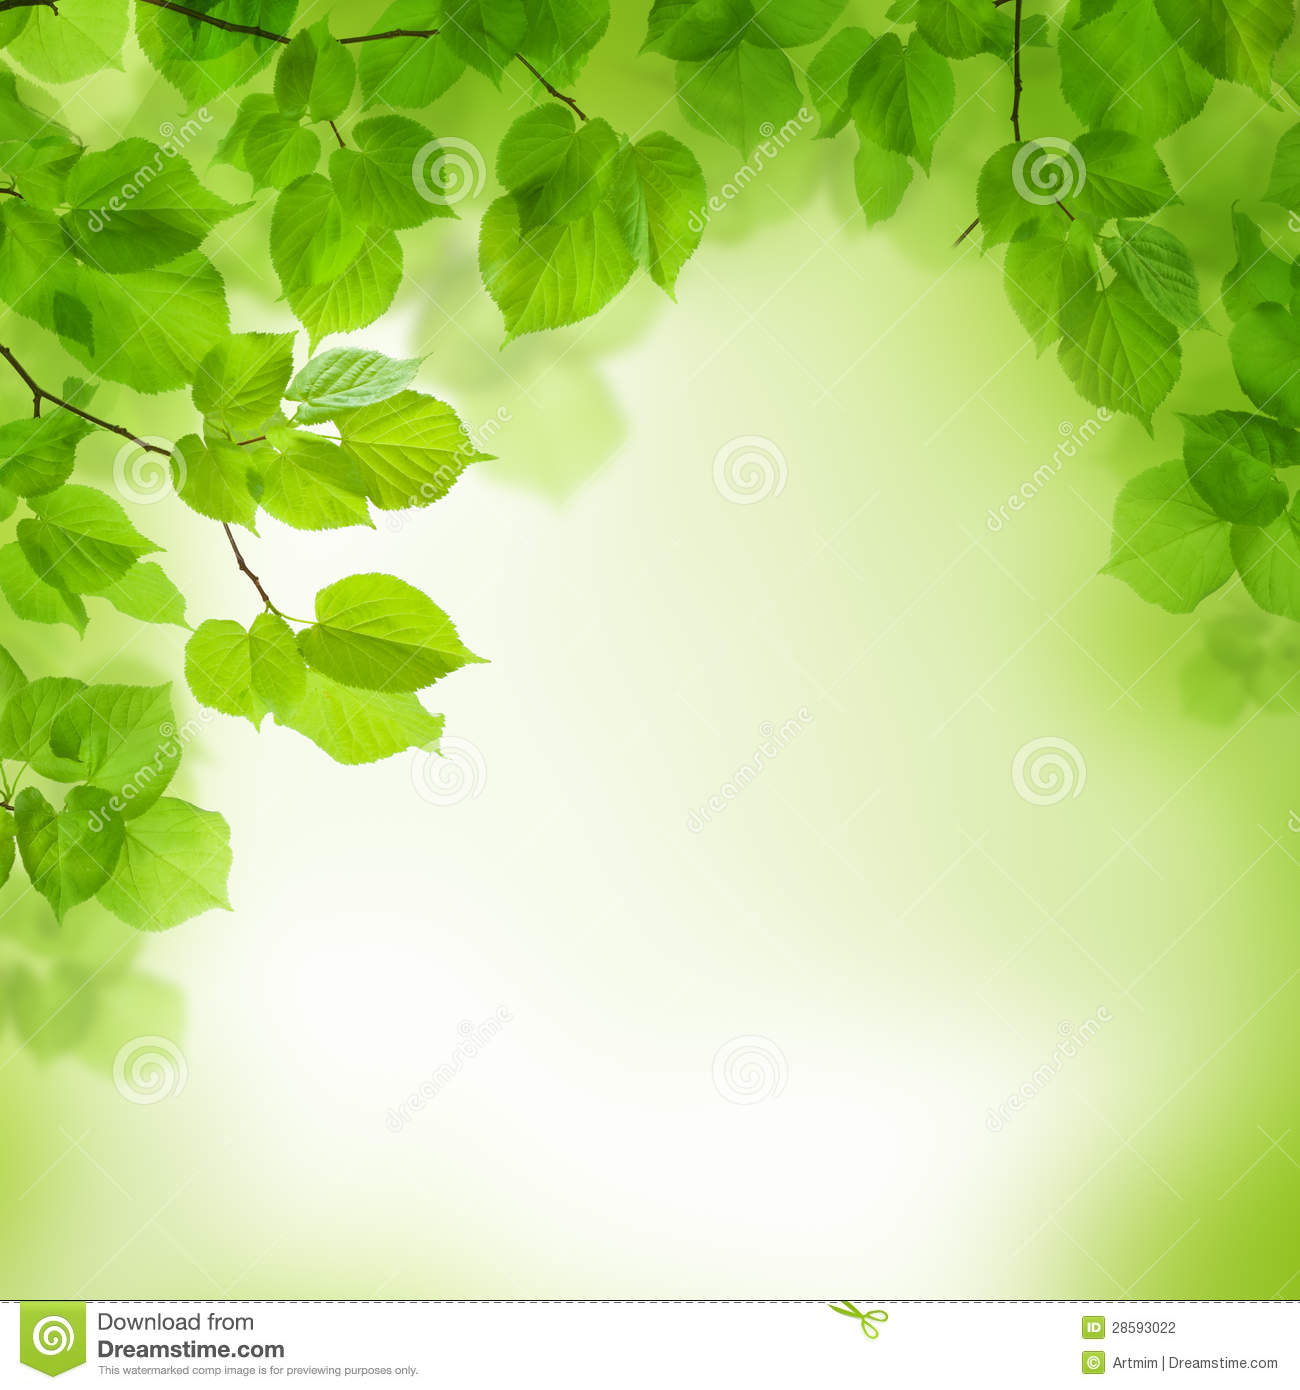 Green Leaf Wallpaper Border HD Wallpapers on picsfaircom